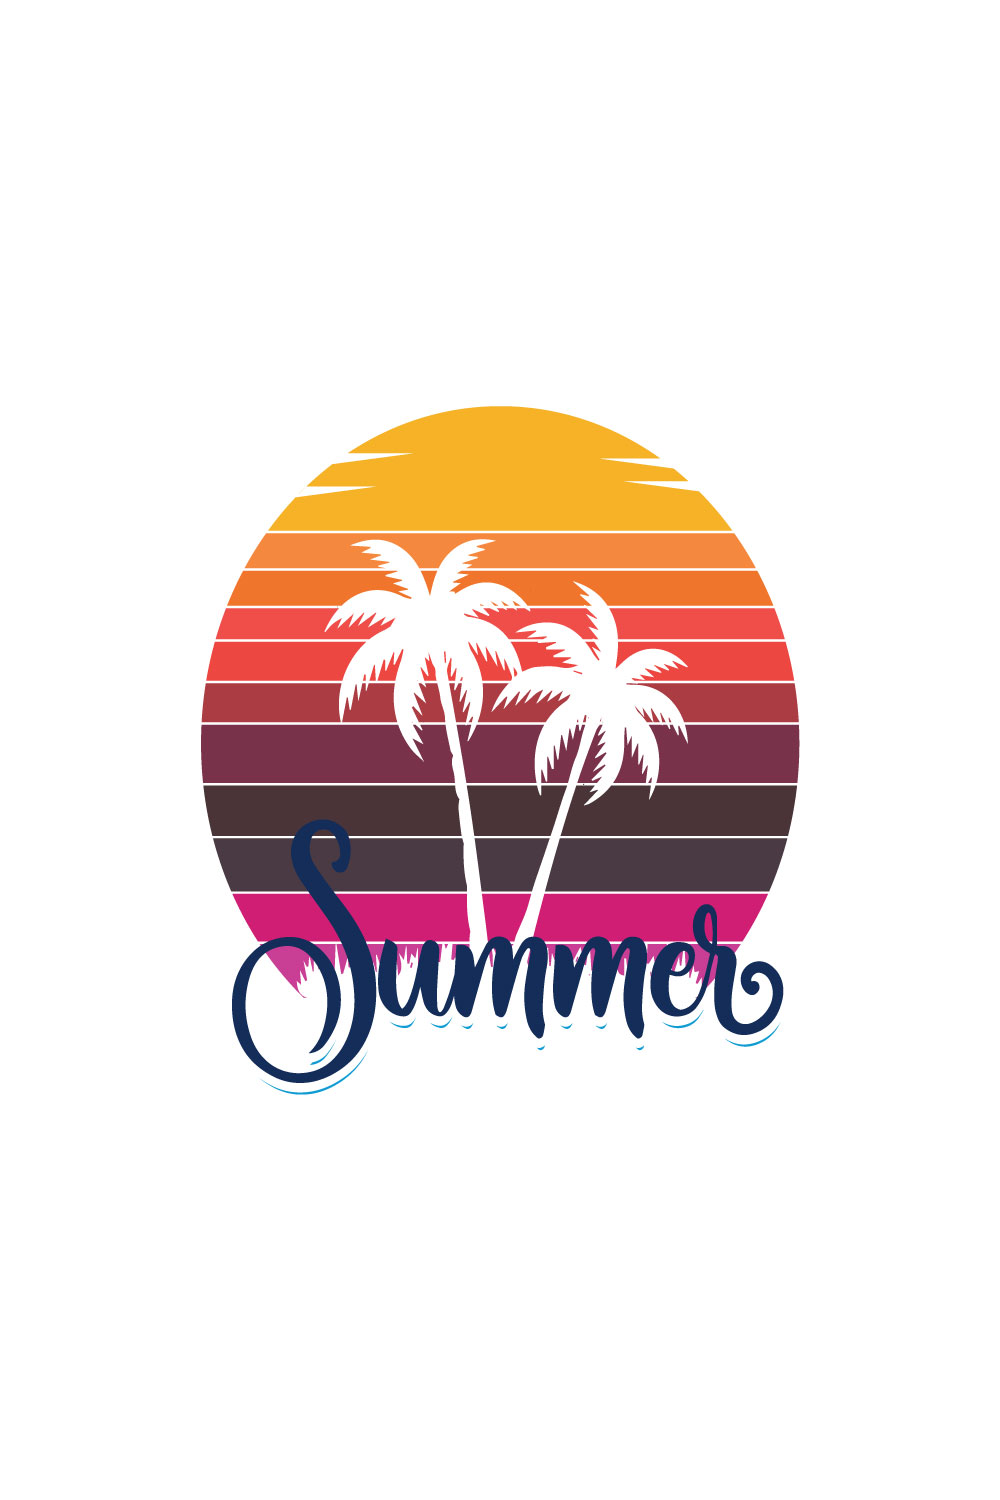 Free summer logo pinterest preview image.